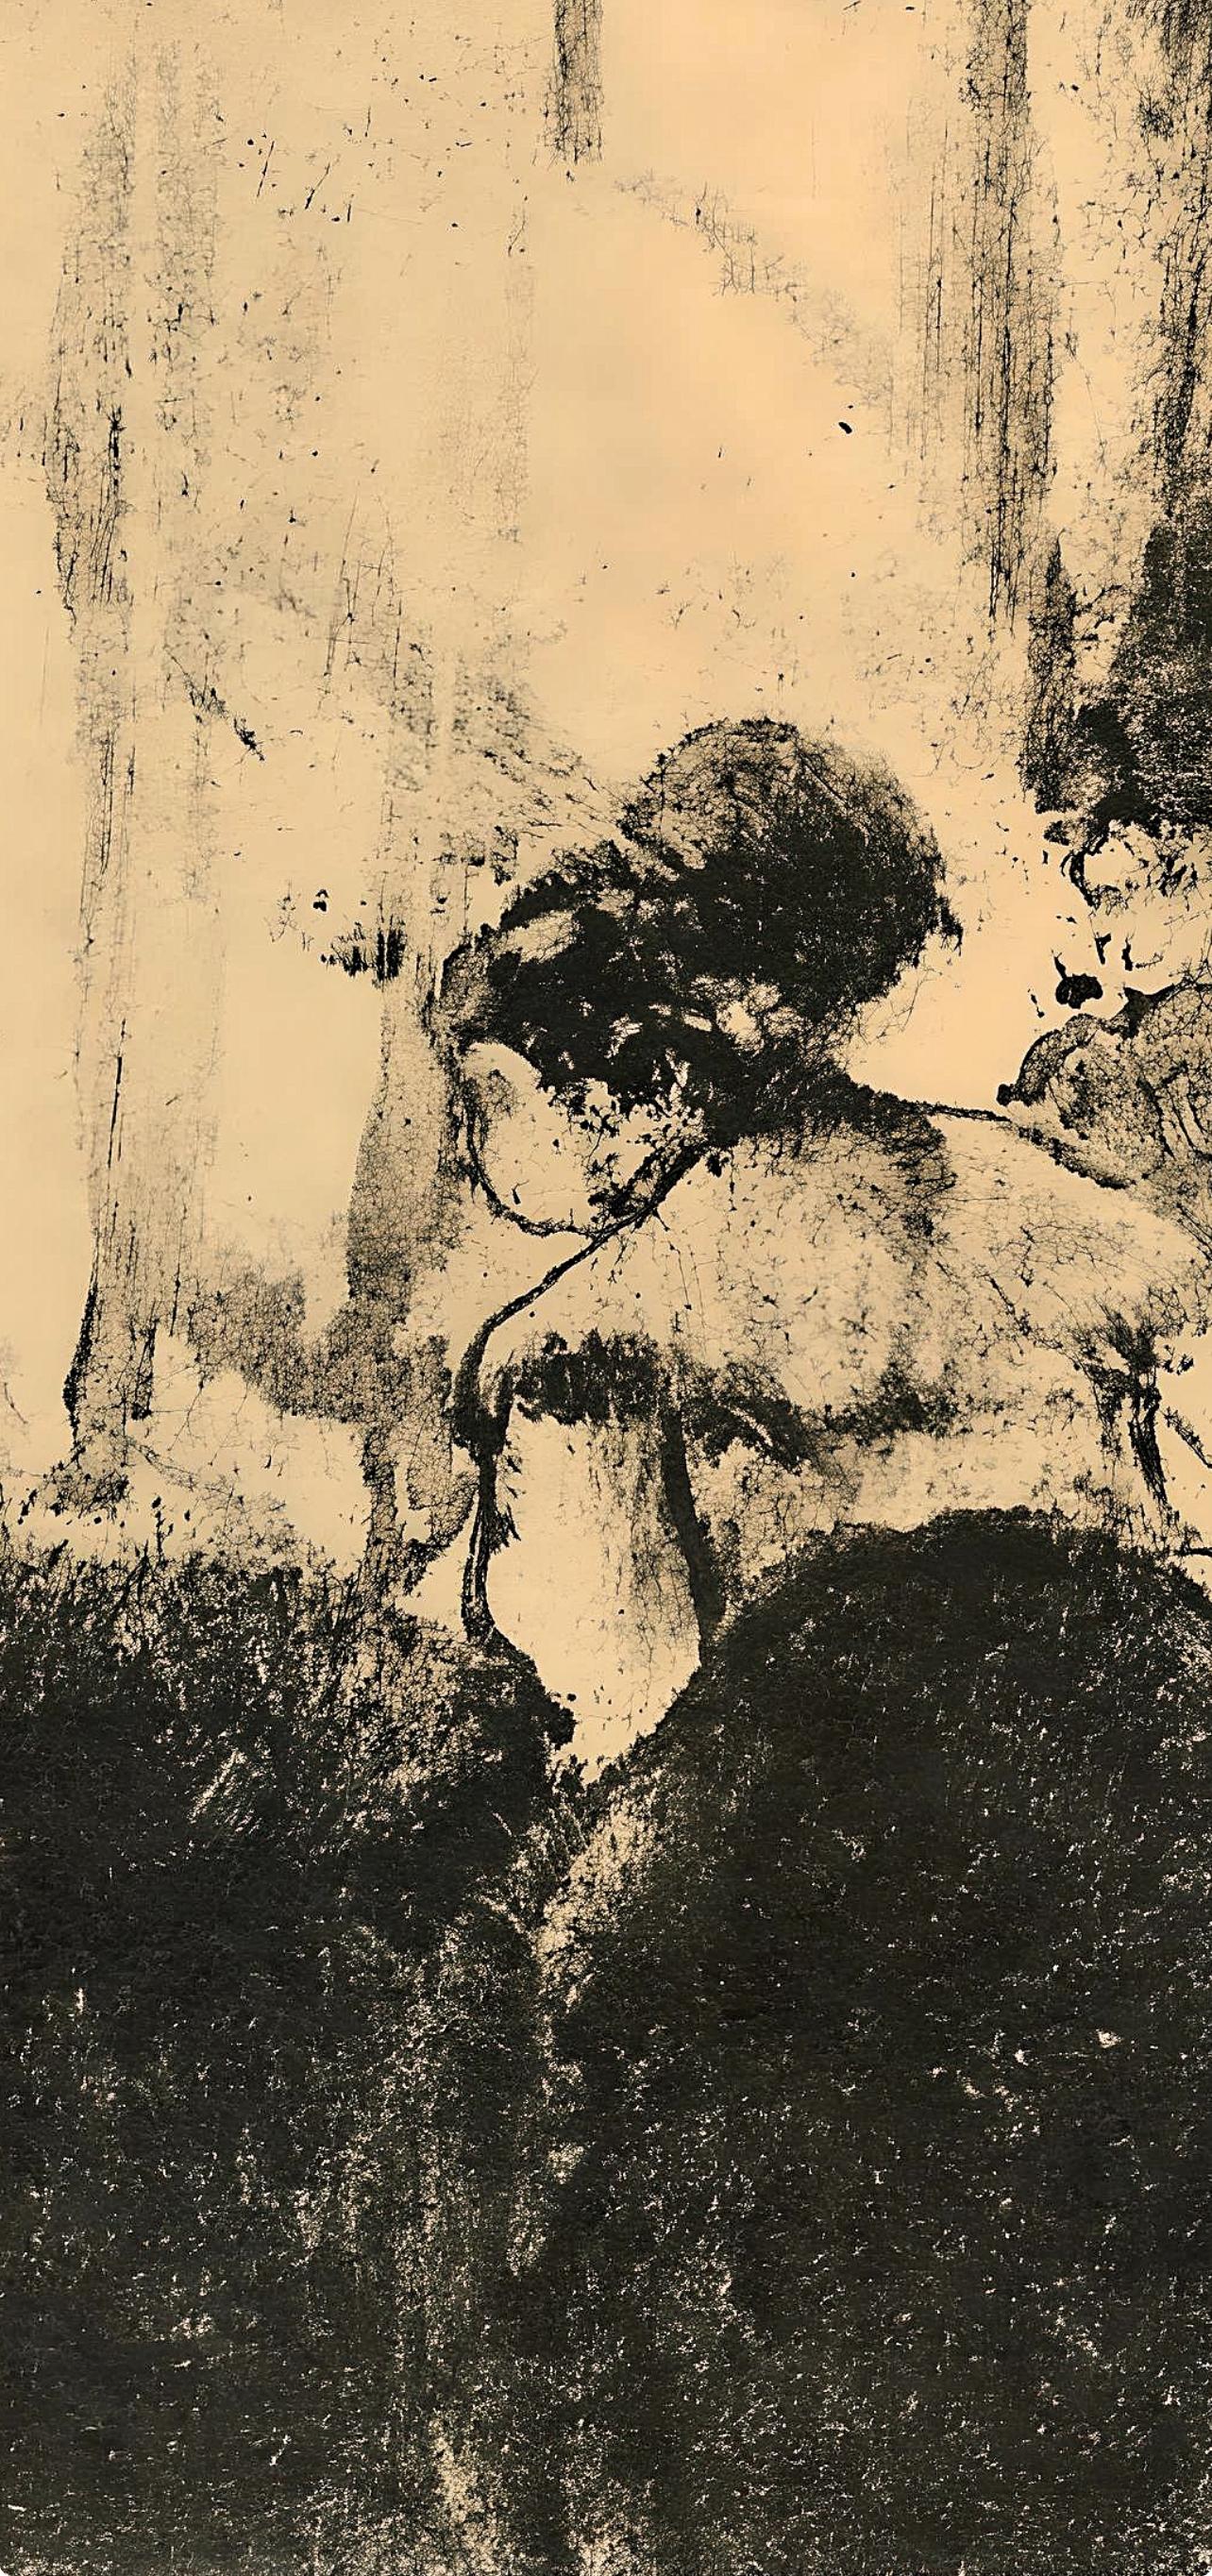 Degas, La Loge, Les Monotypes (after) - Print by Edgar Degas